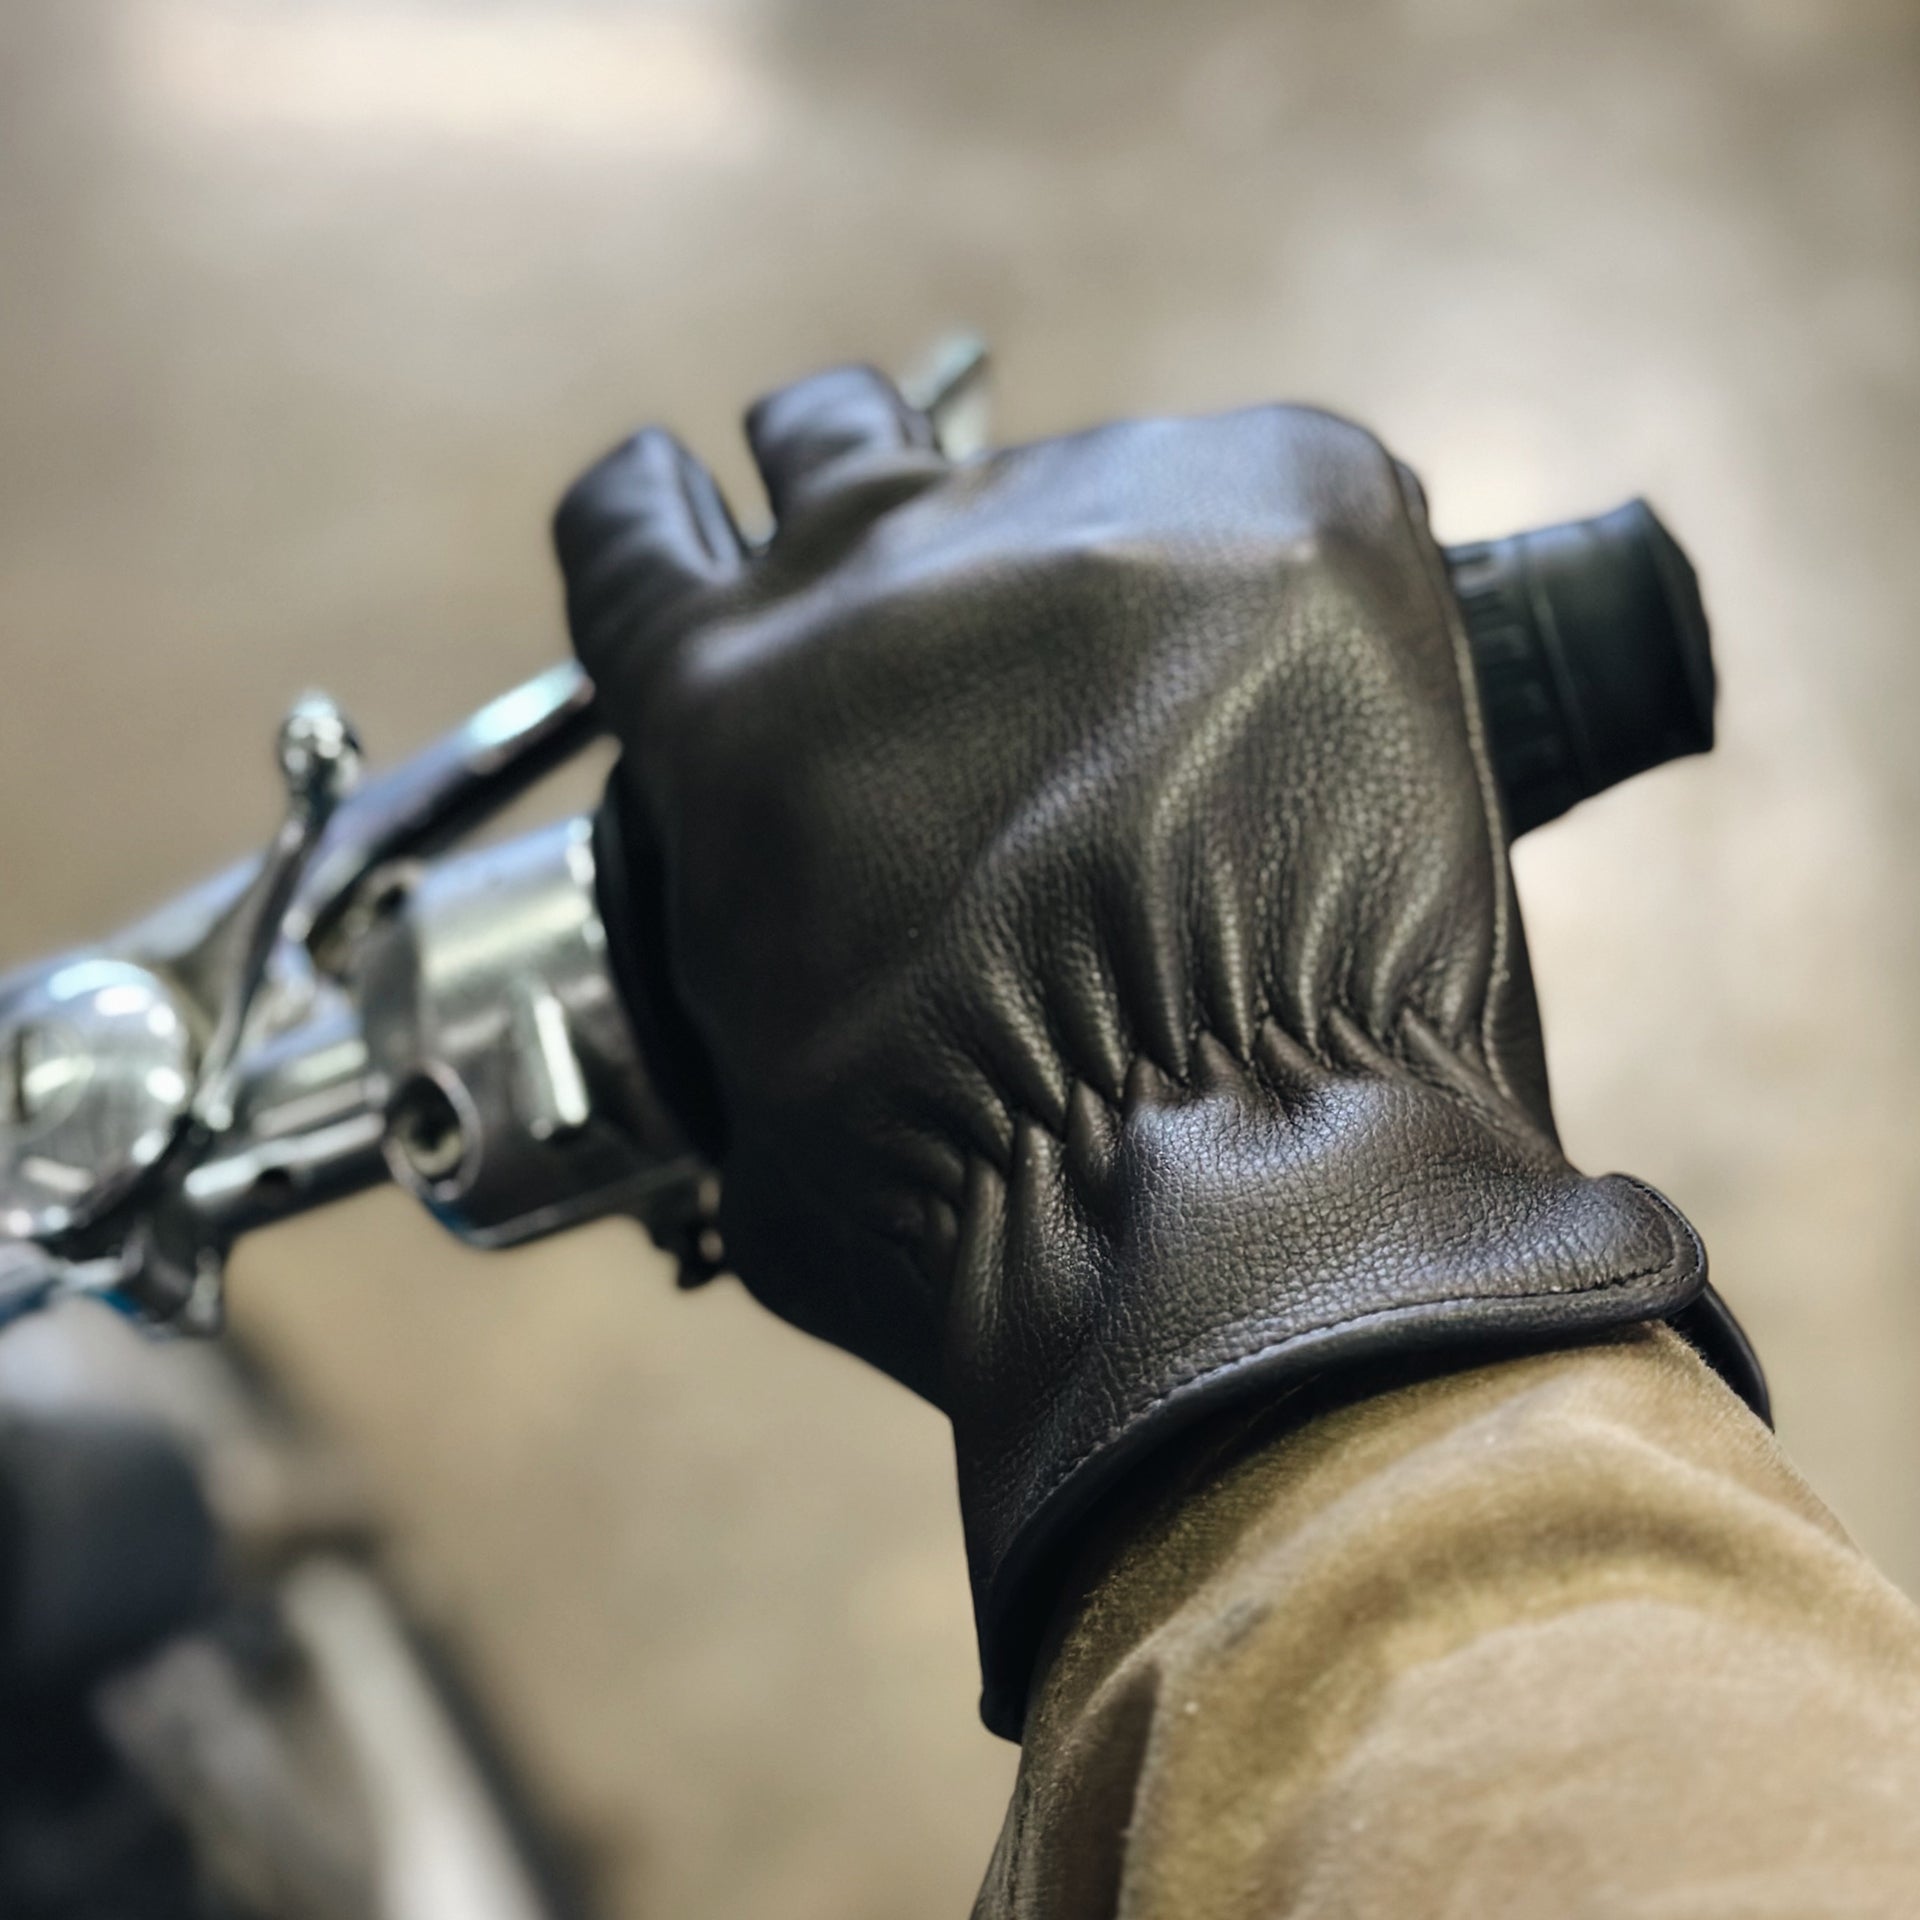 The Roper Glove - Black Leather